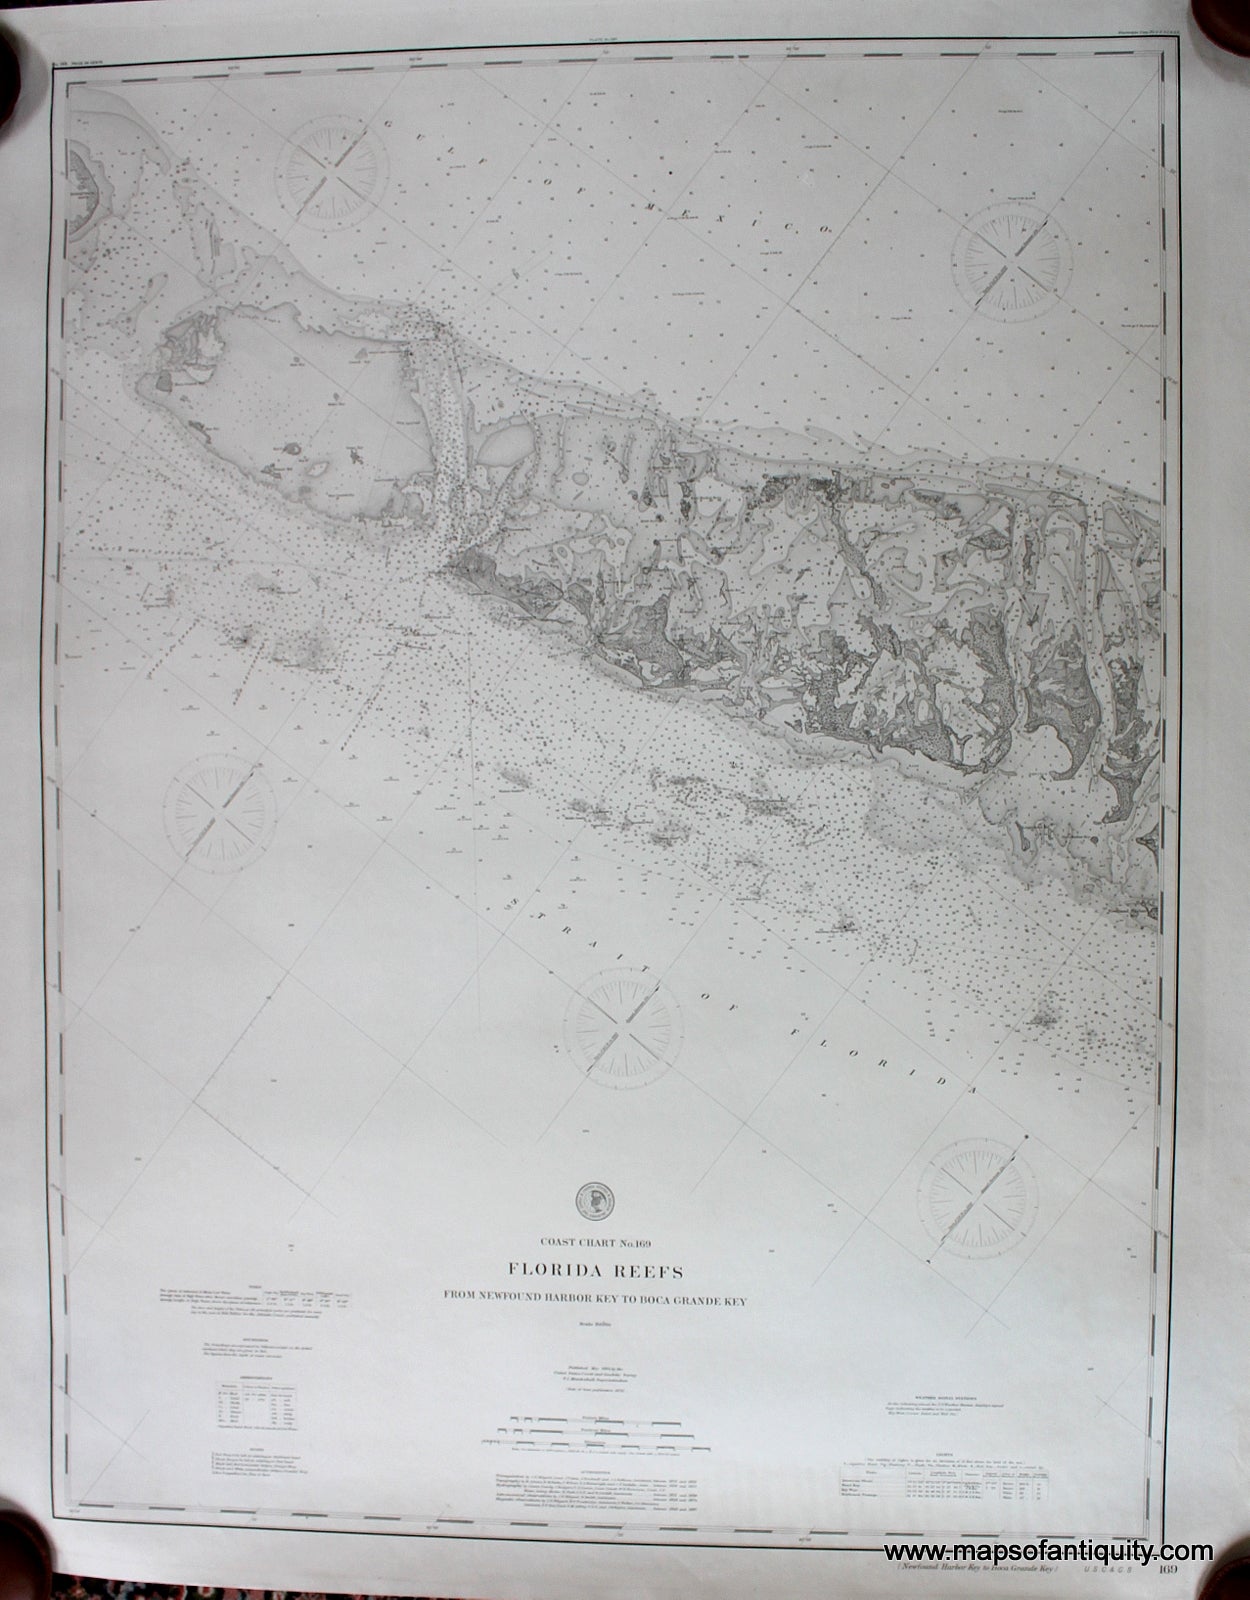 Antique-Black-and-White-Antique-Nautical-Chart-Coastal-Chart-No.-169-Florida-Reefs-from-Newfound-Harbor-to-Boca-Grande-Key-Antique-Nautical-Charts-Florida-1894-U.S.-Coast-Survey-Maps-Of-Antiquity